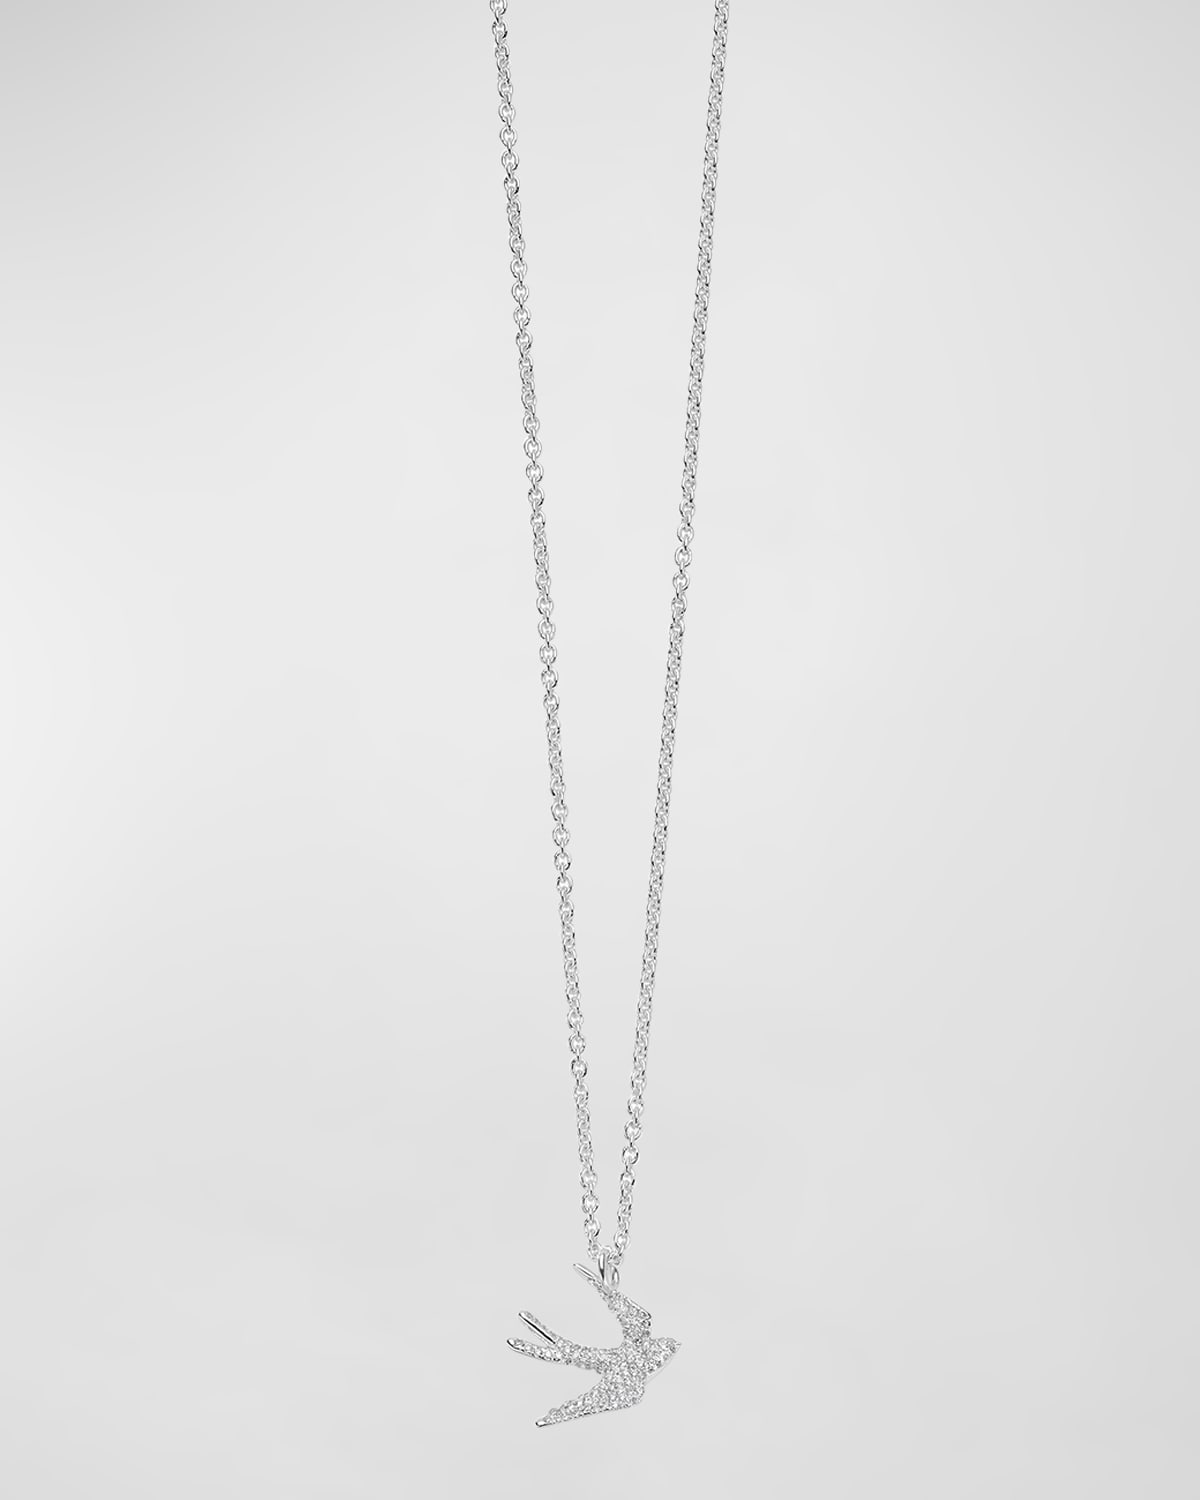 Black Bird on Branch Silver Coloured Pendant Necklace Chain 17" 42cm Jewellery 